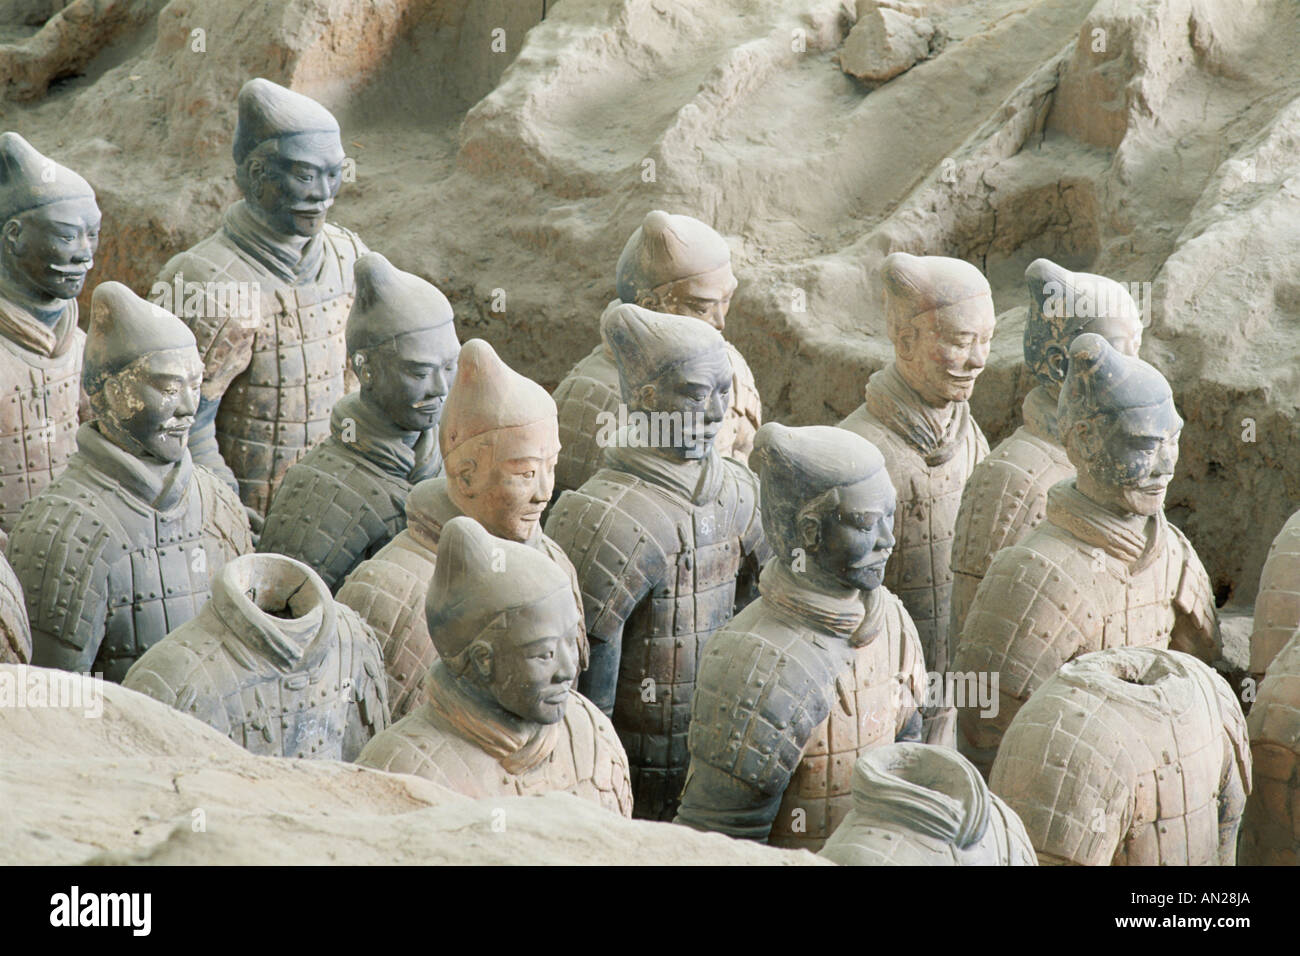 Terracotta Warriors / Terracotta Army (Qin Dynasty), Xian, Shaanxi Province, China Stock Photo